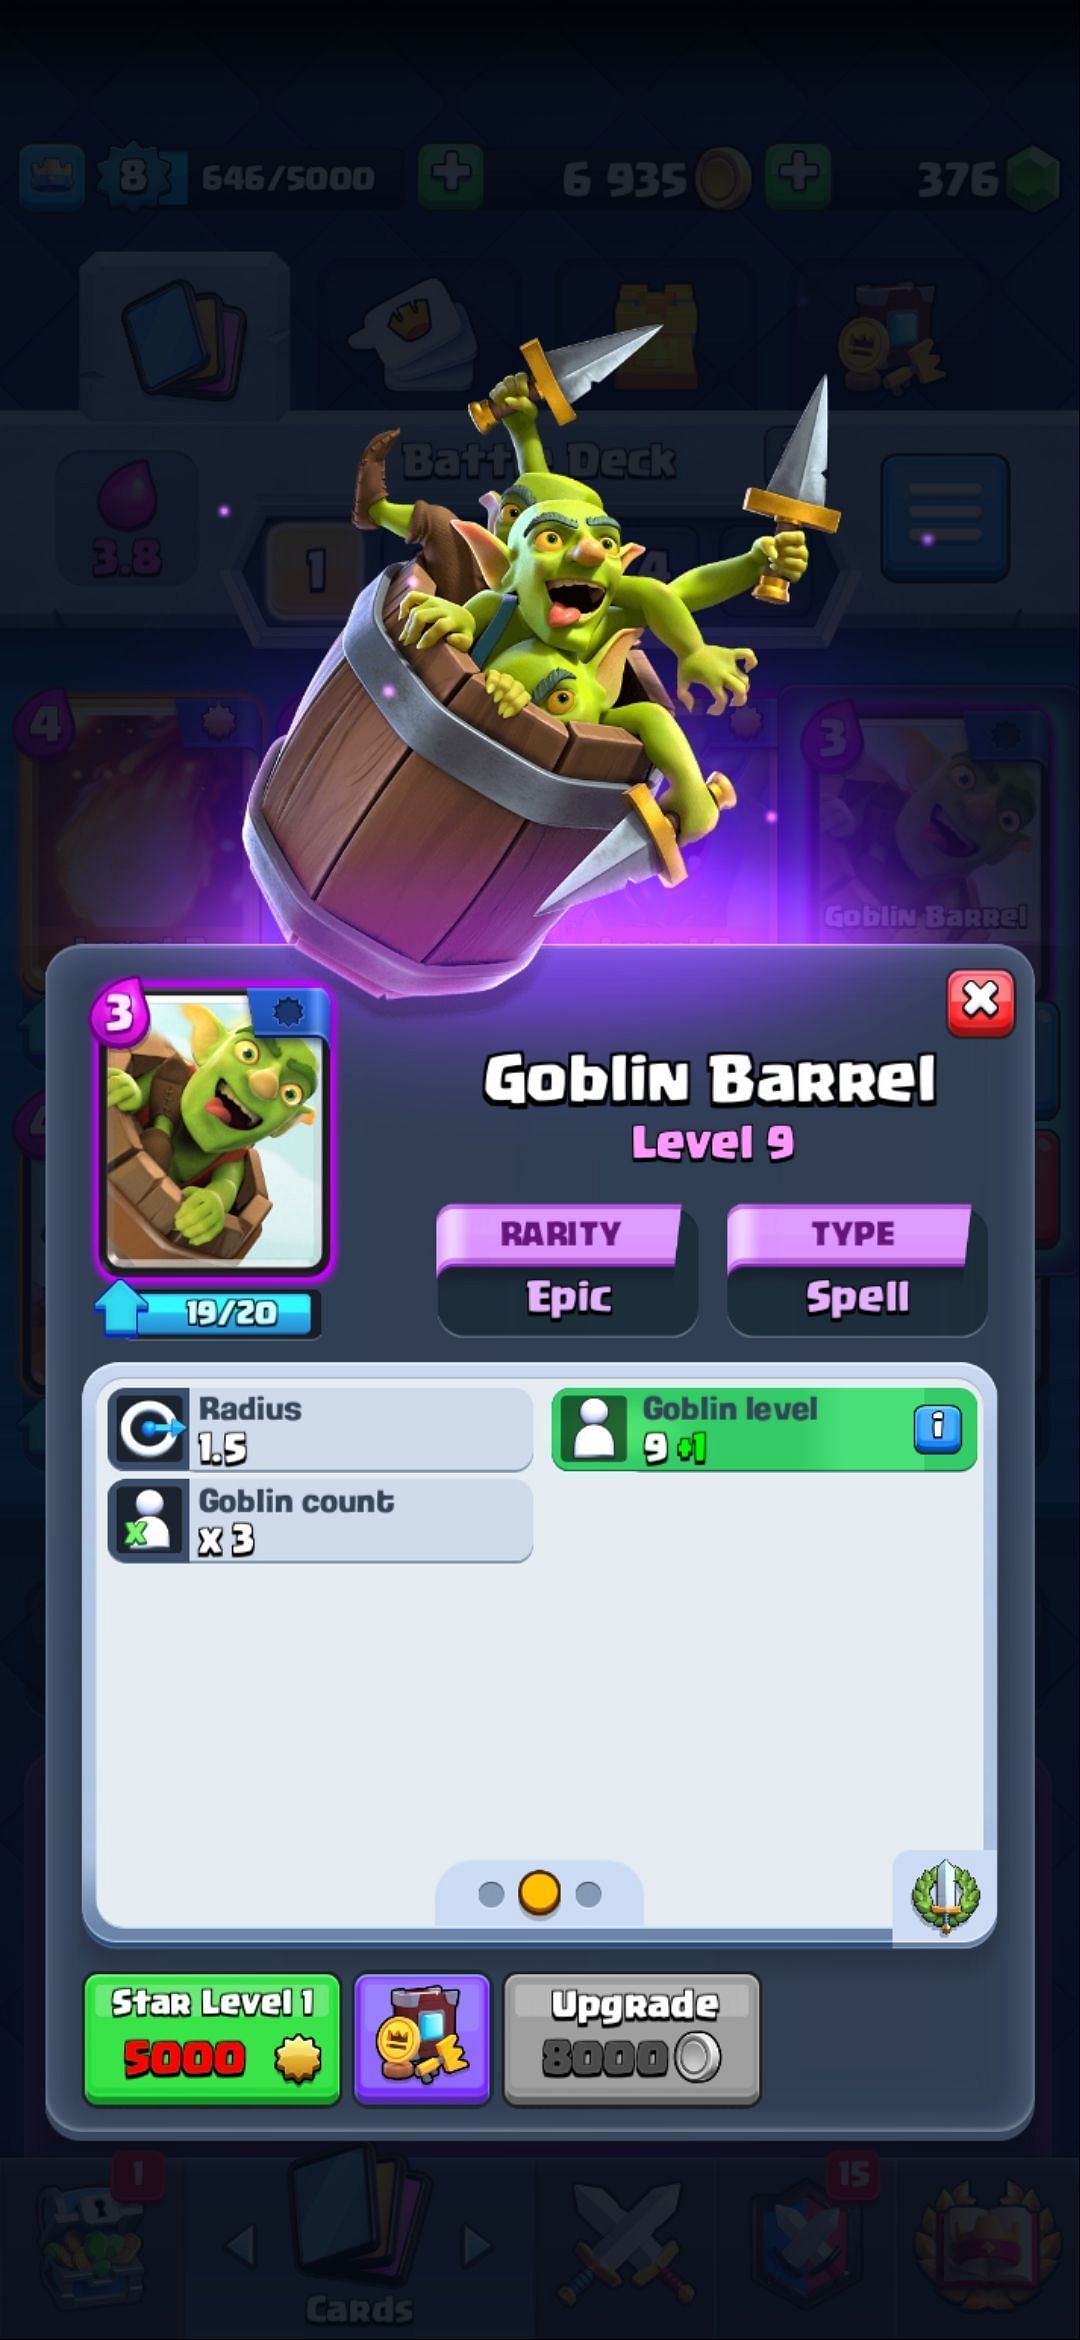 The Goblin Barrel card (Image via Clash of Clans)